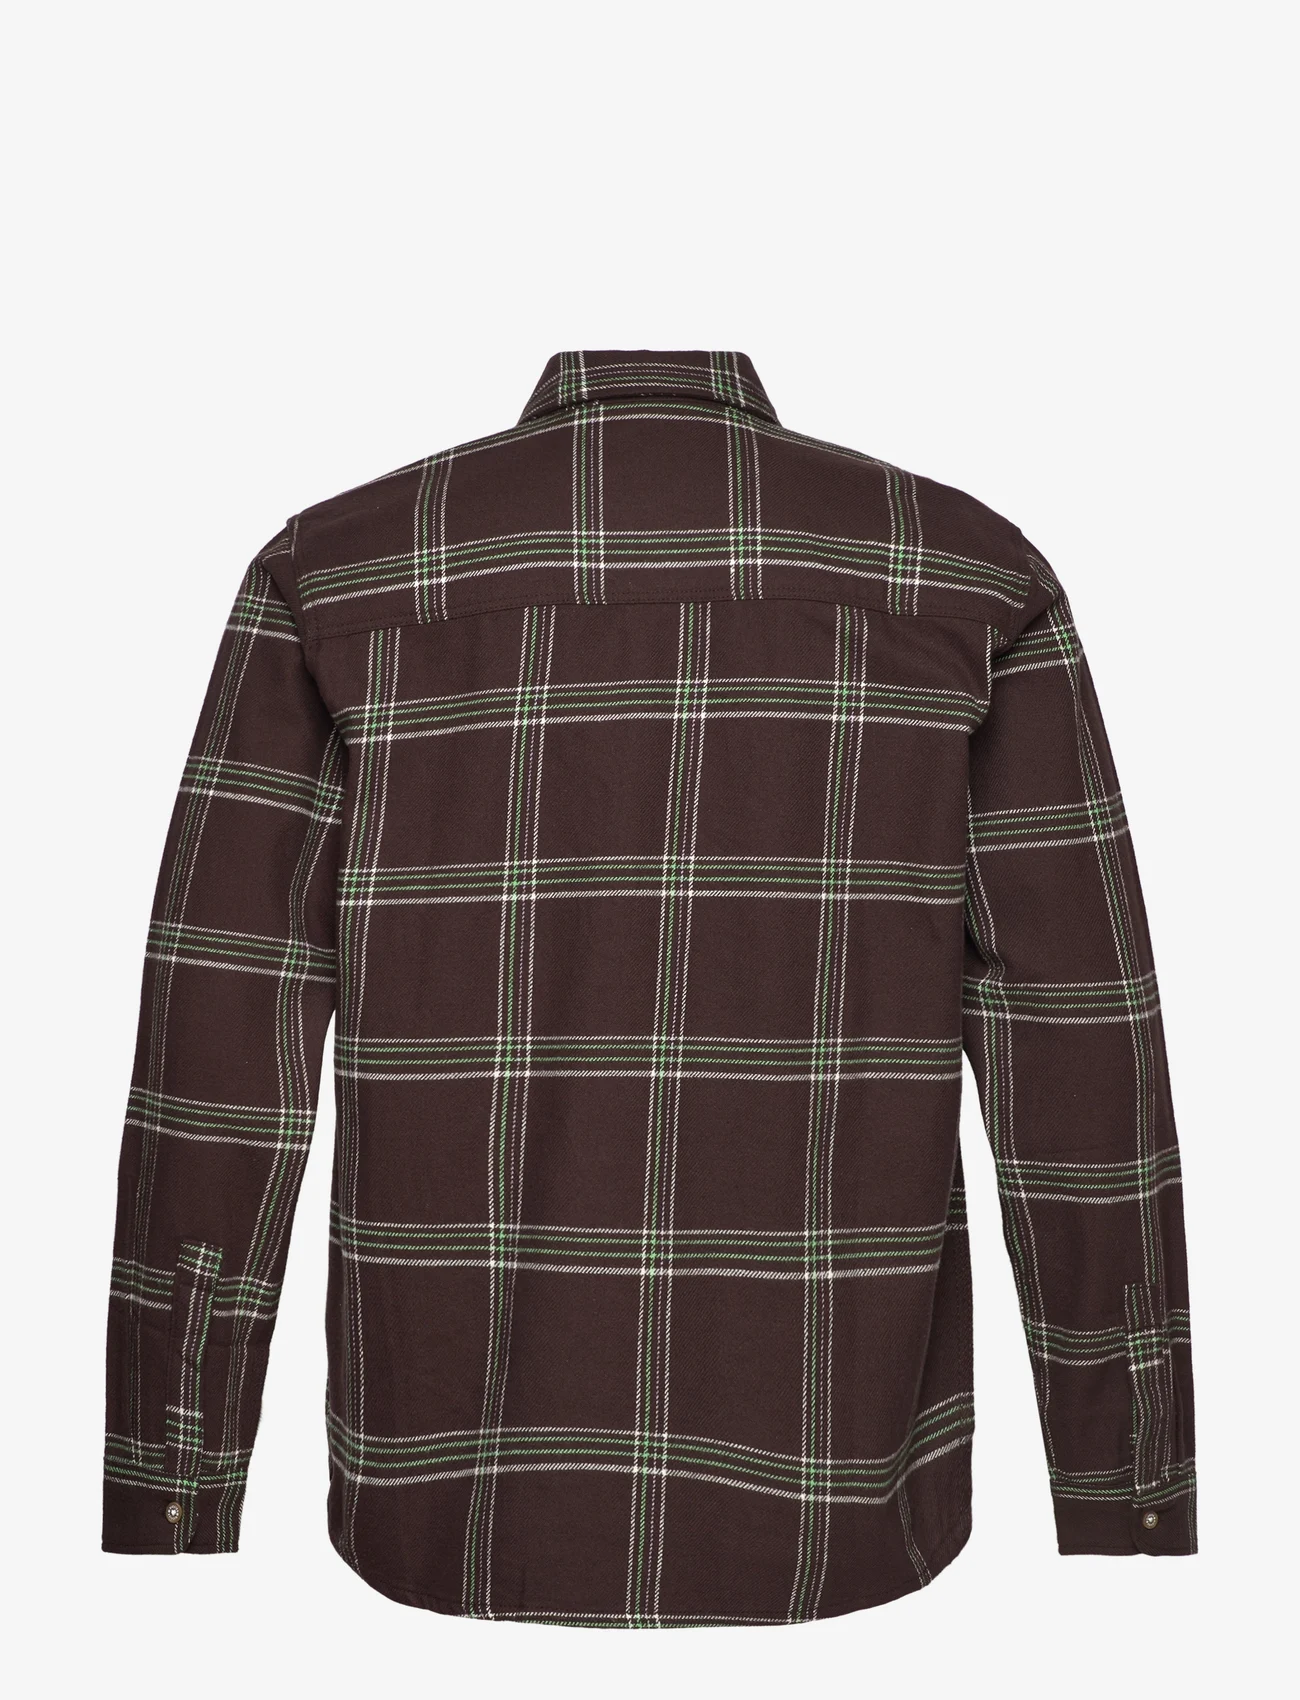 Dickies - WARRENTON SHIRT LS - checkered shirts - dkdbx - 1